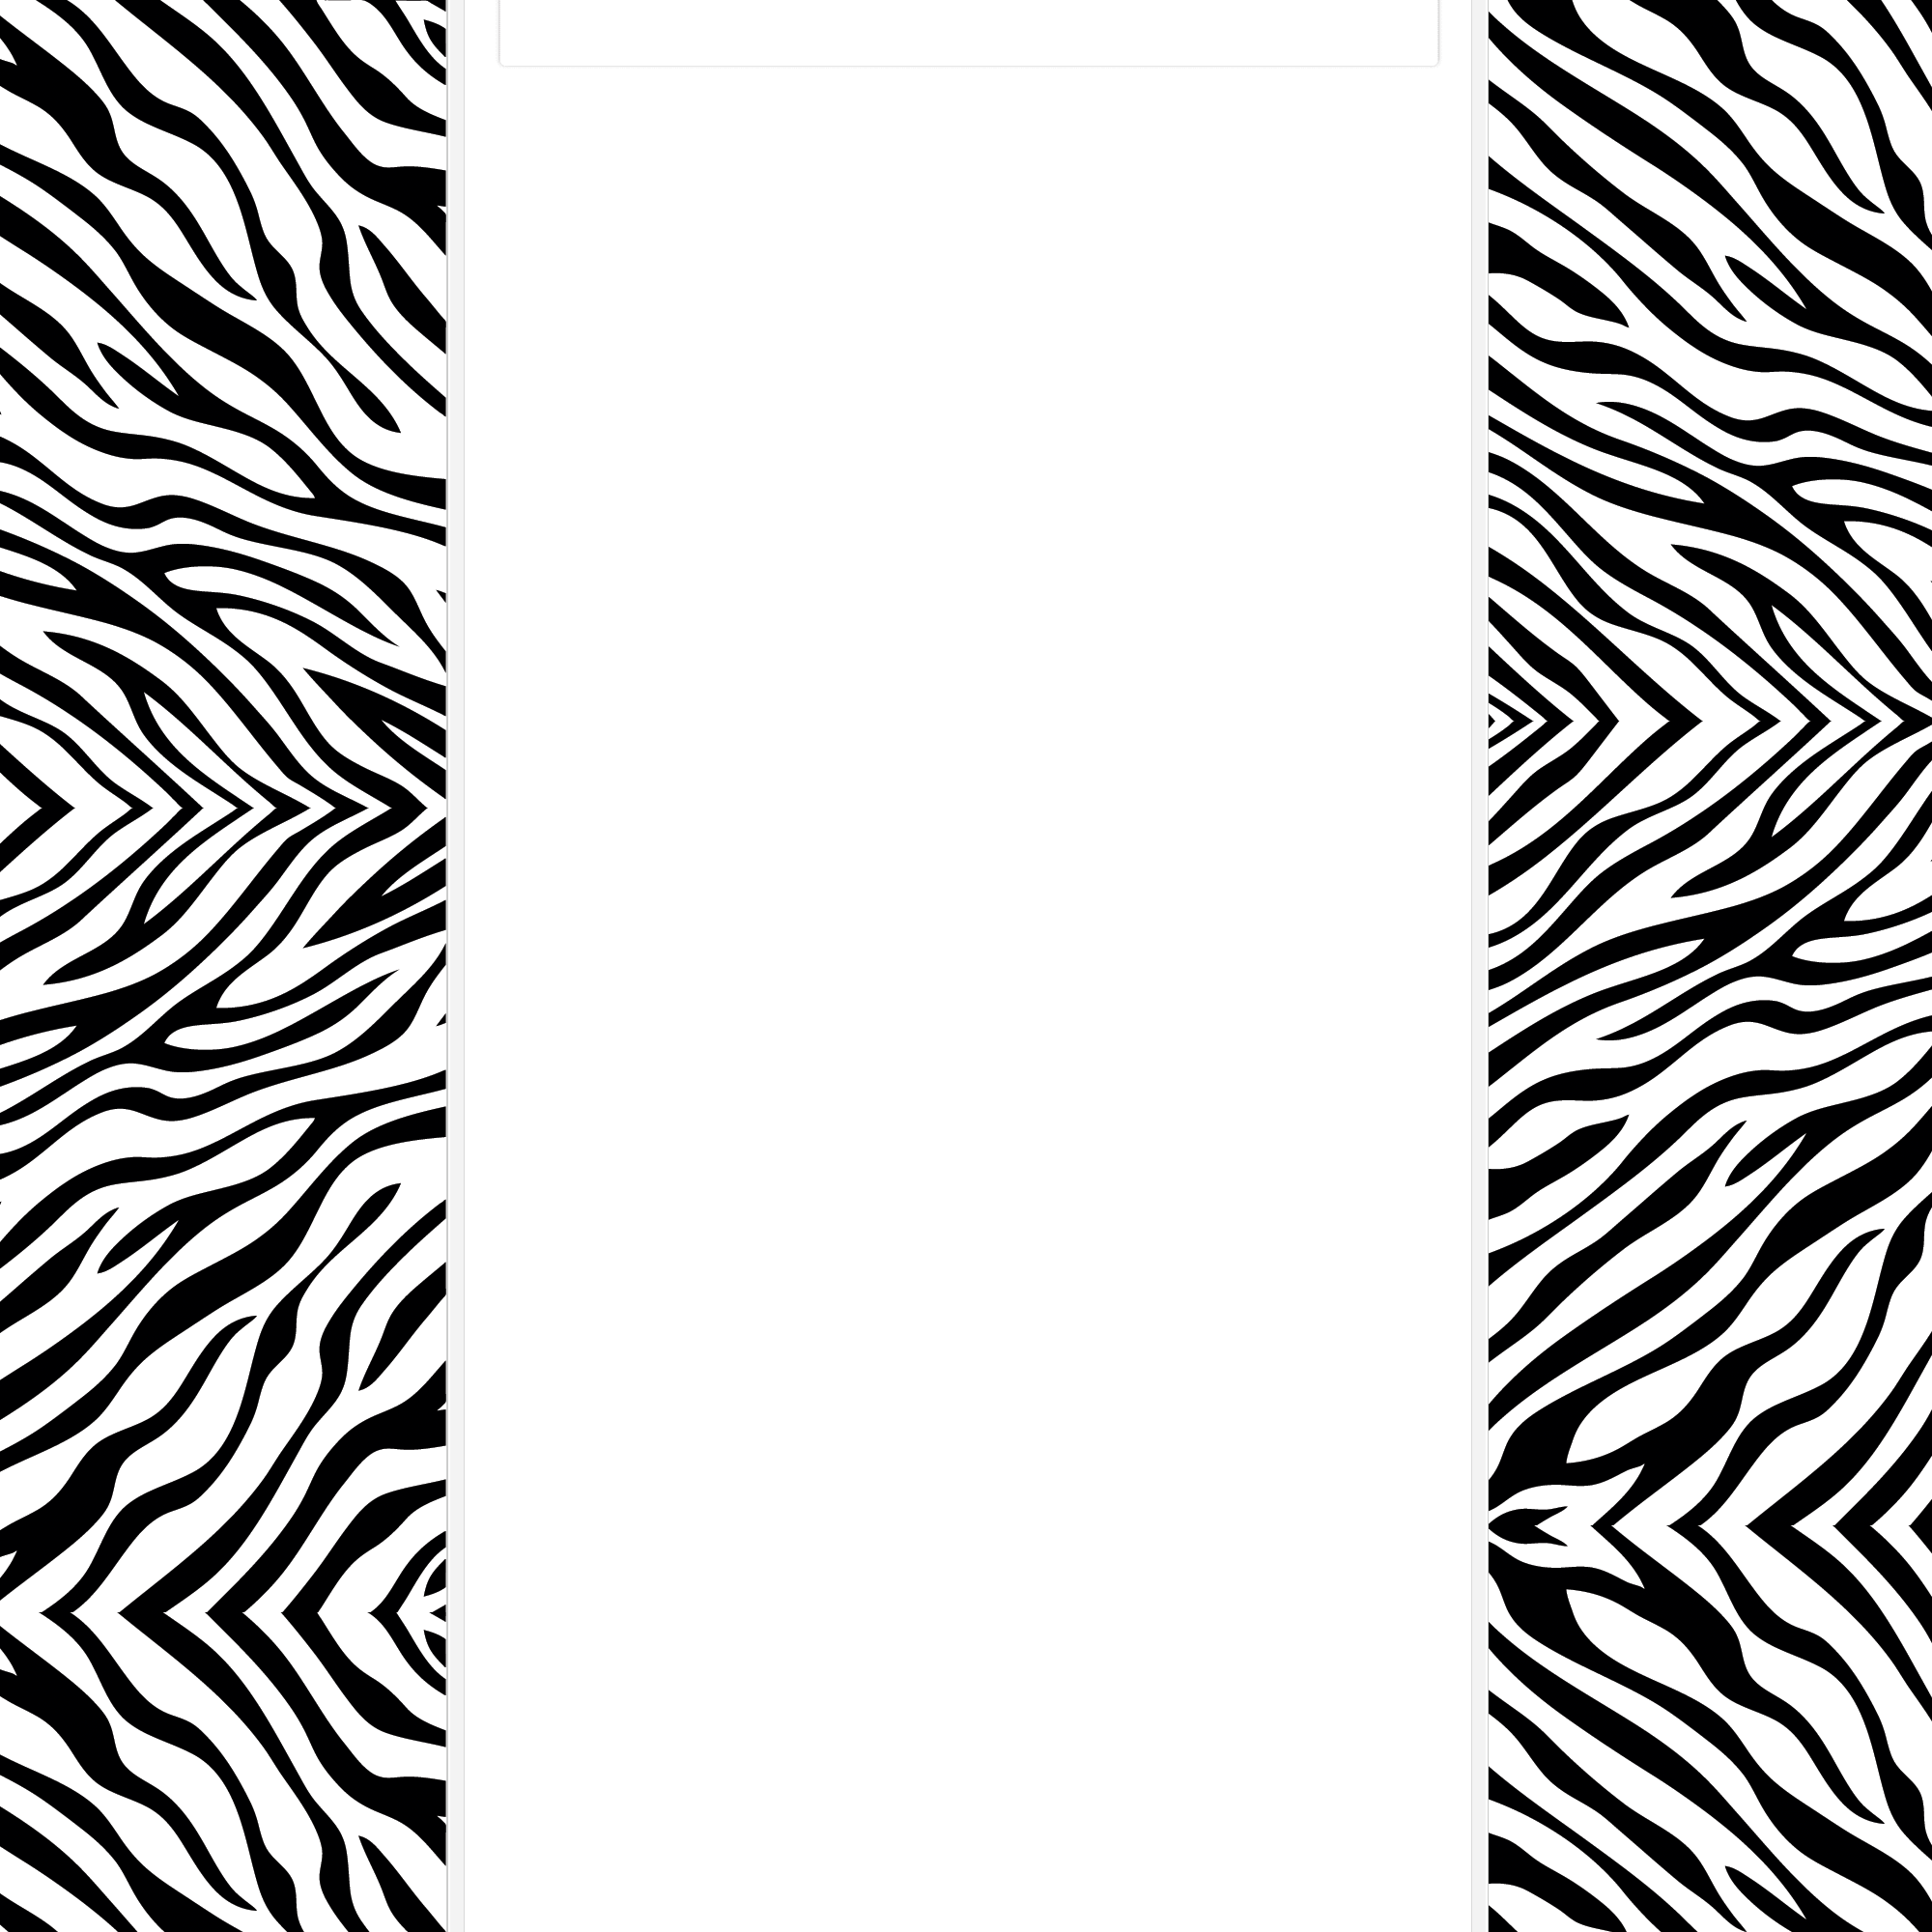 Zebra Background Clipart | Free Download Clip Art | Free Clip Art ...